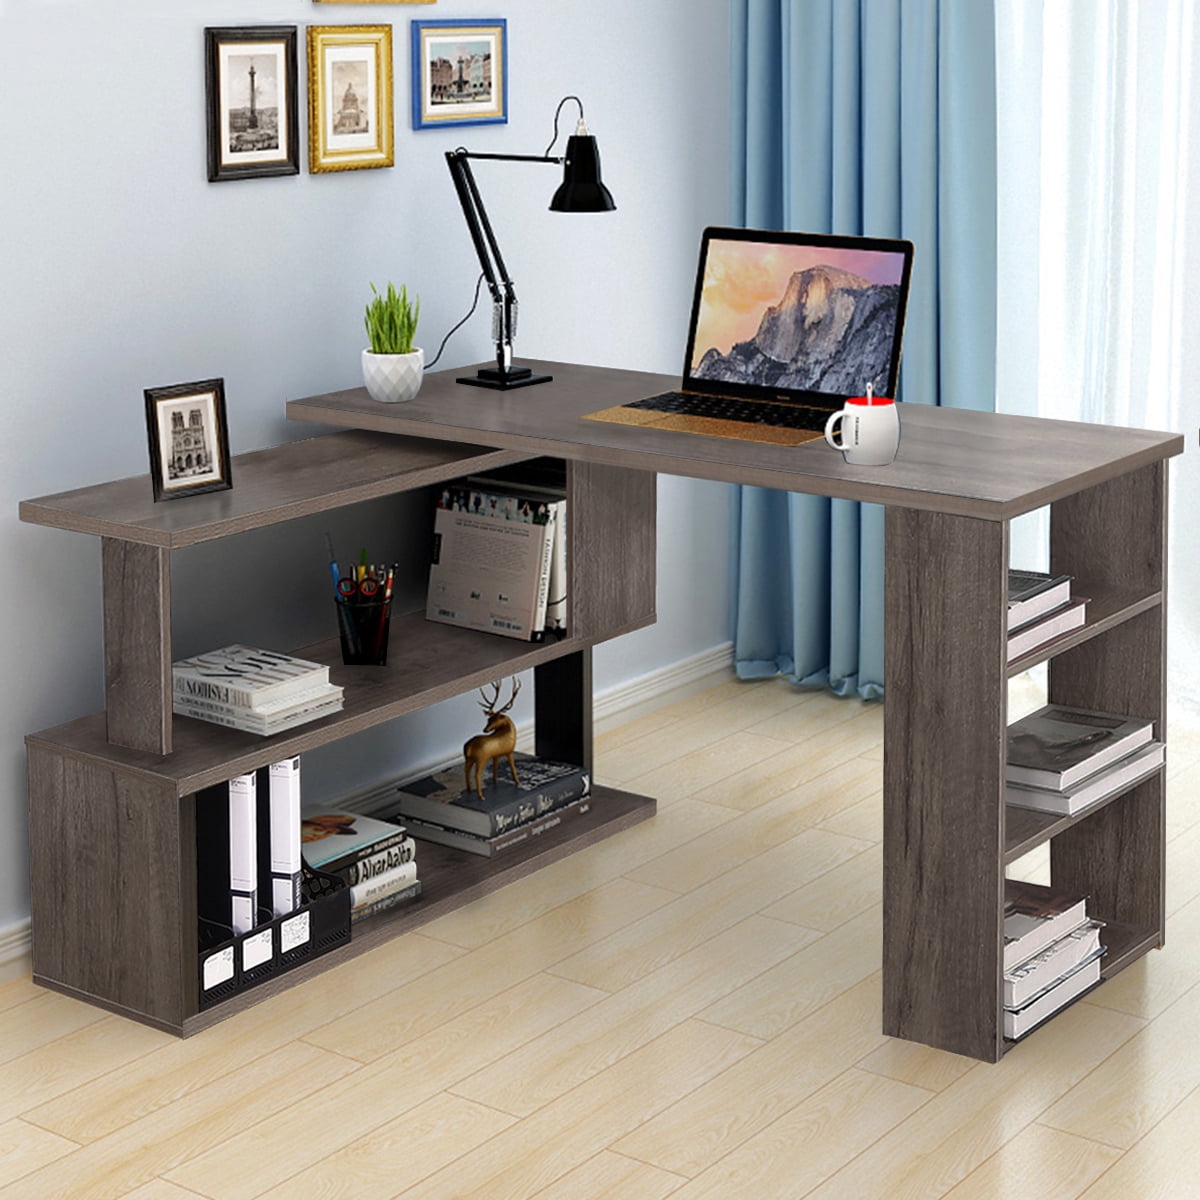 Desk with storage - sekaunlimited